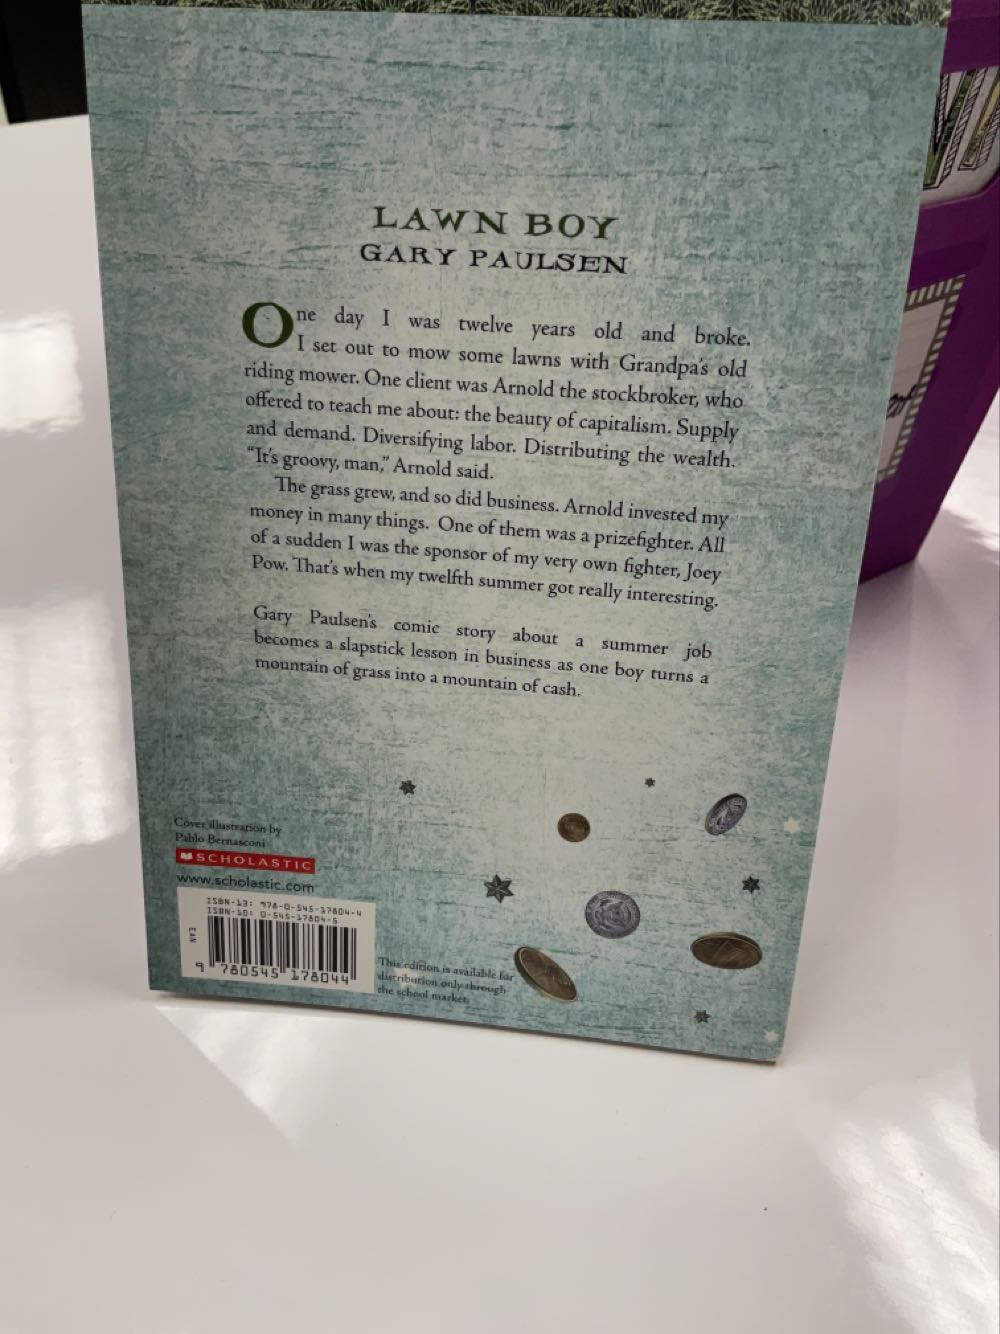 Lawn Boy - Gary Paulsen (Scholastic Inc. - Paperback) book collectible [Barcode 9780545178044] - Main Image 2